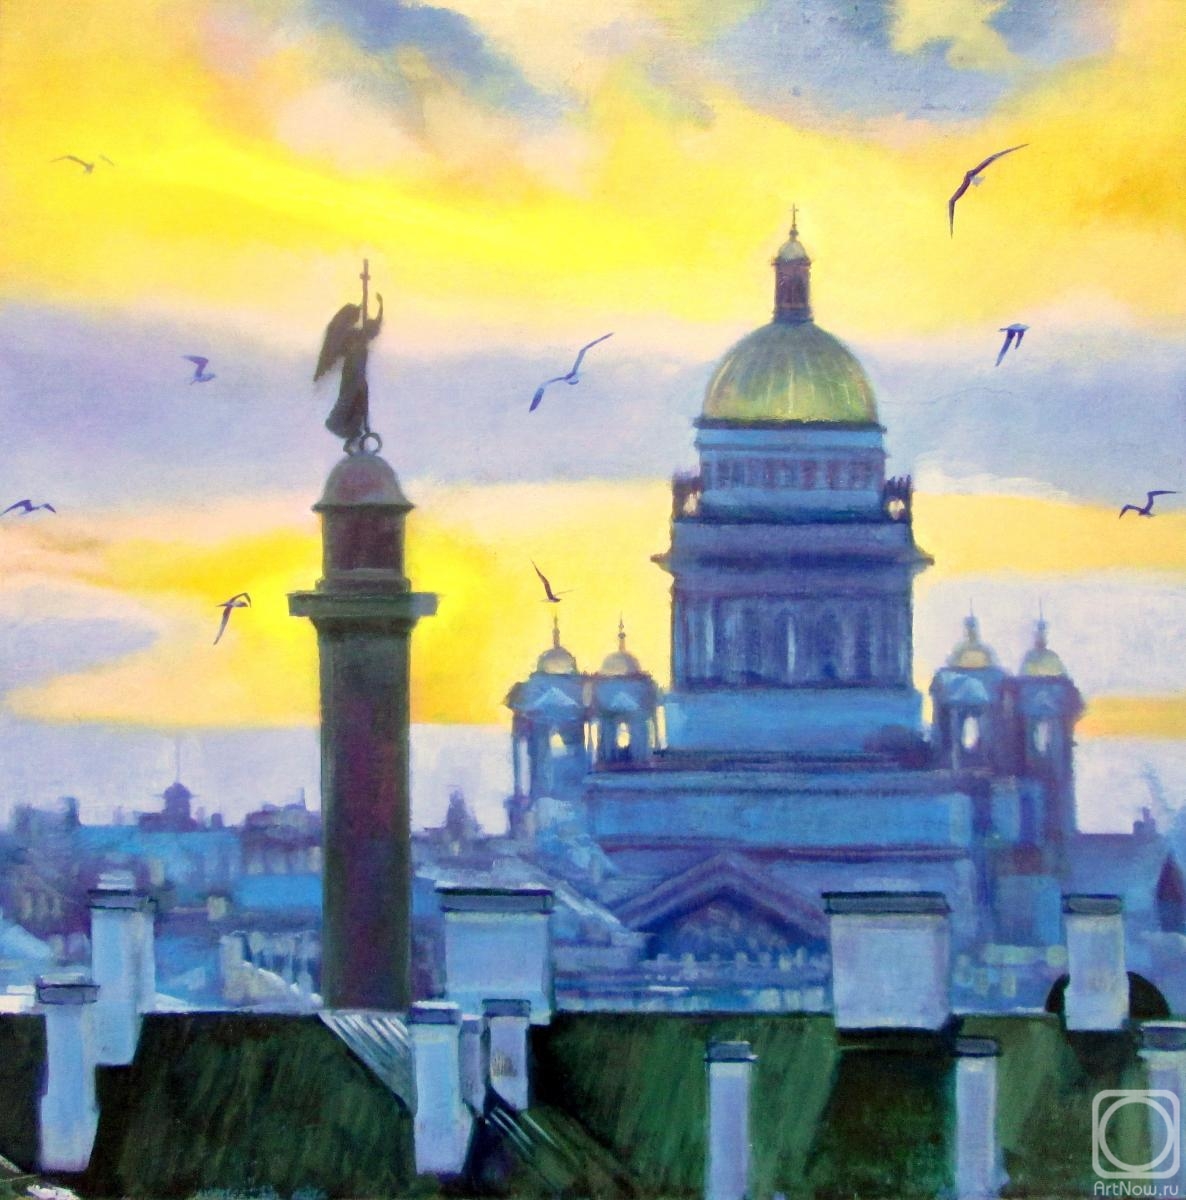 Pautov Igor. Seagulls over the city